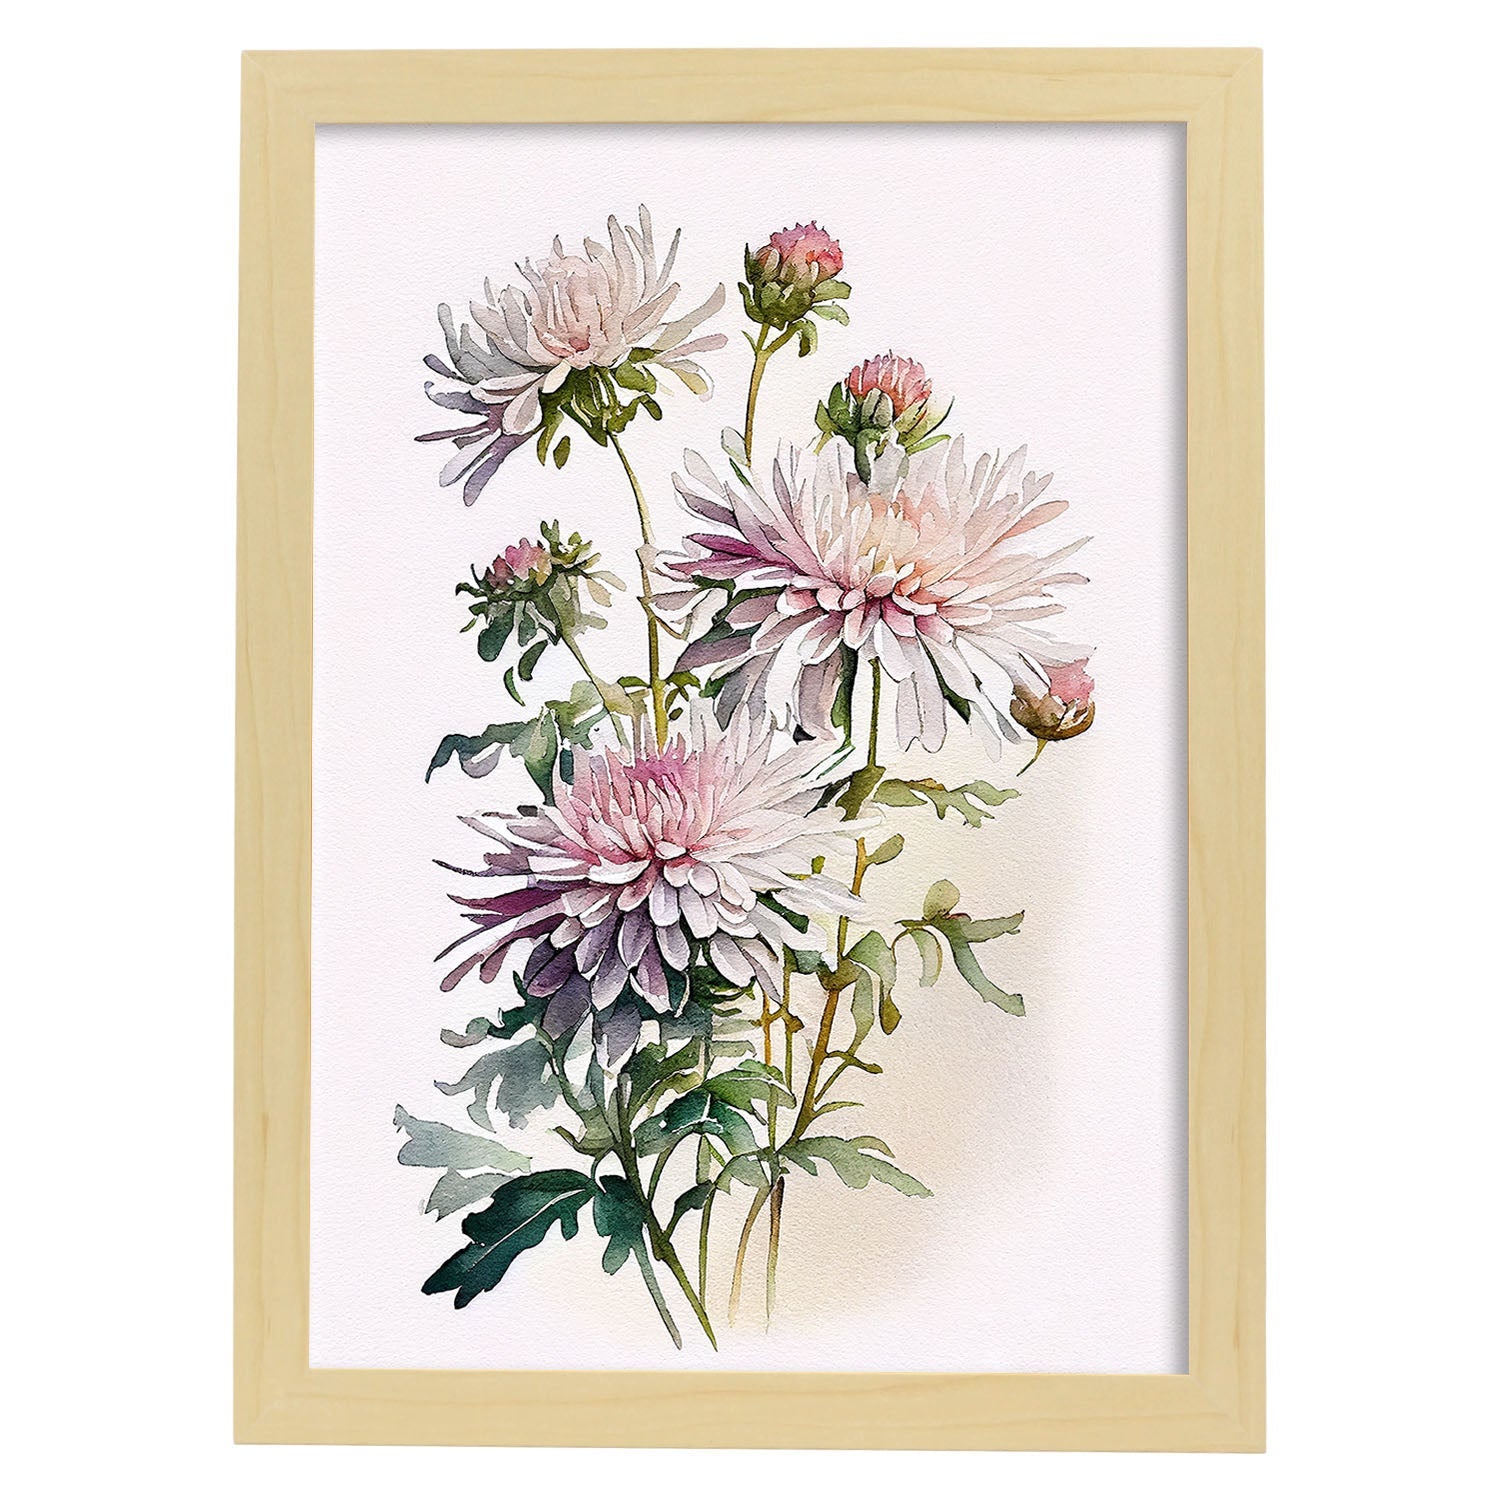 Nacnic watercolor minmal Chrysanthemum_3. Aesthetic Wall Art Prints for Bedroom or Living Room Design.-Artwork-Nacnic-A4-Marco Madera Clara-Nacnic Estudio SL